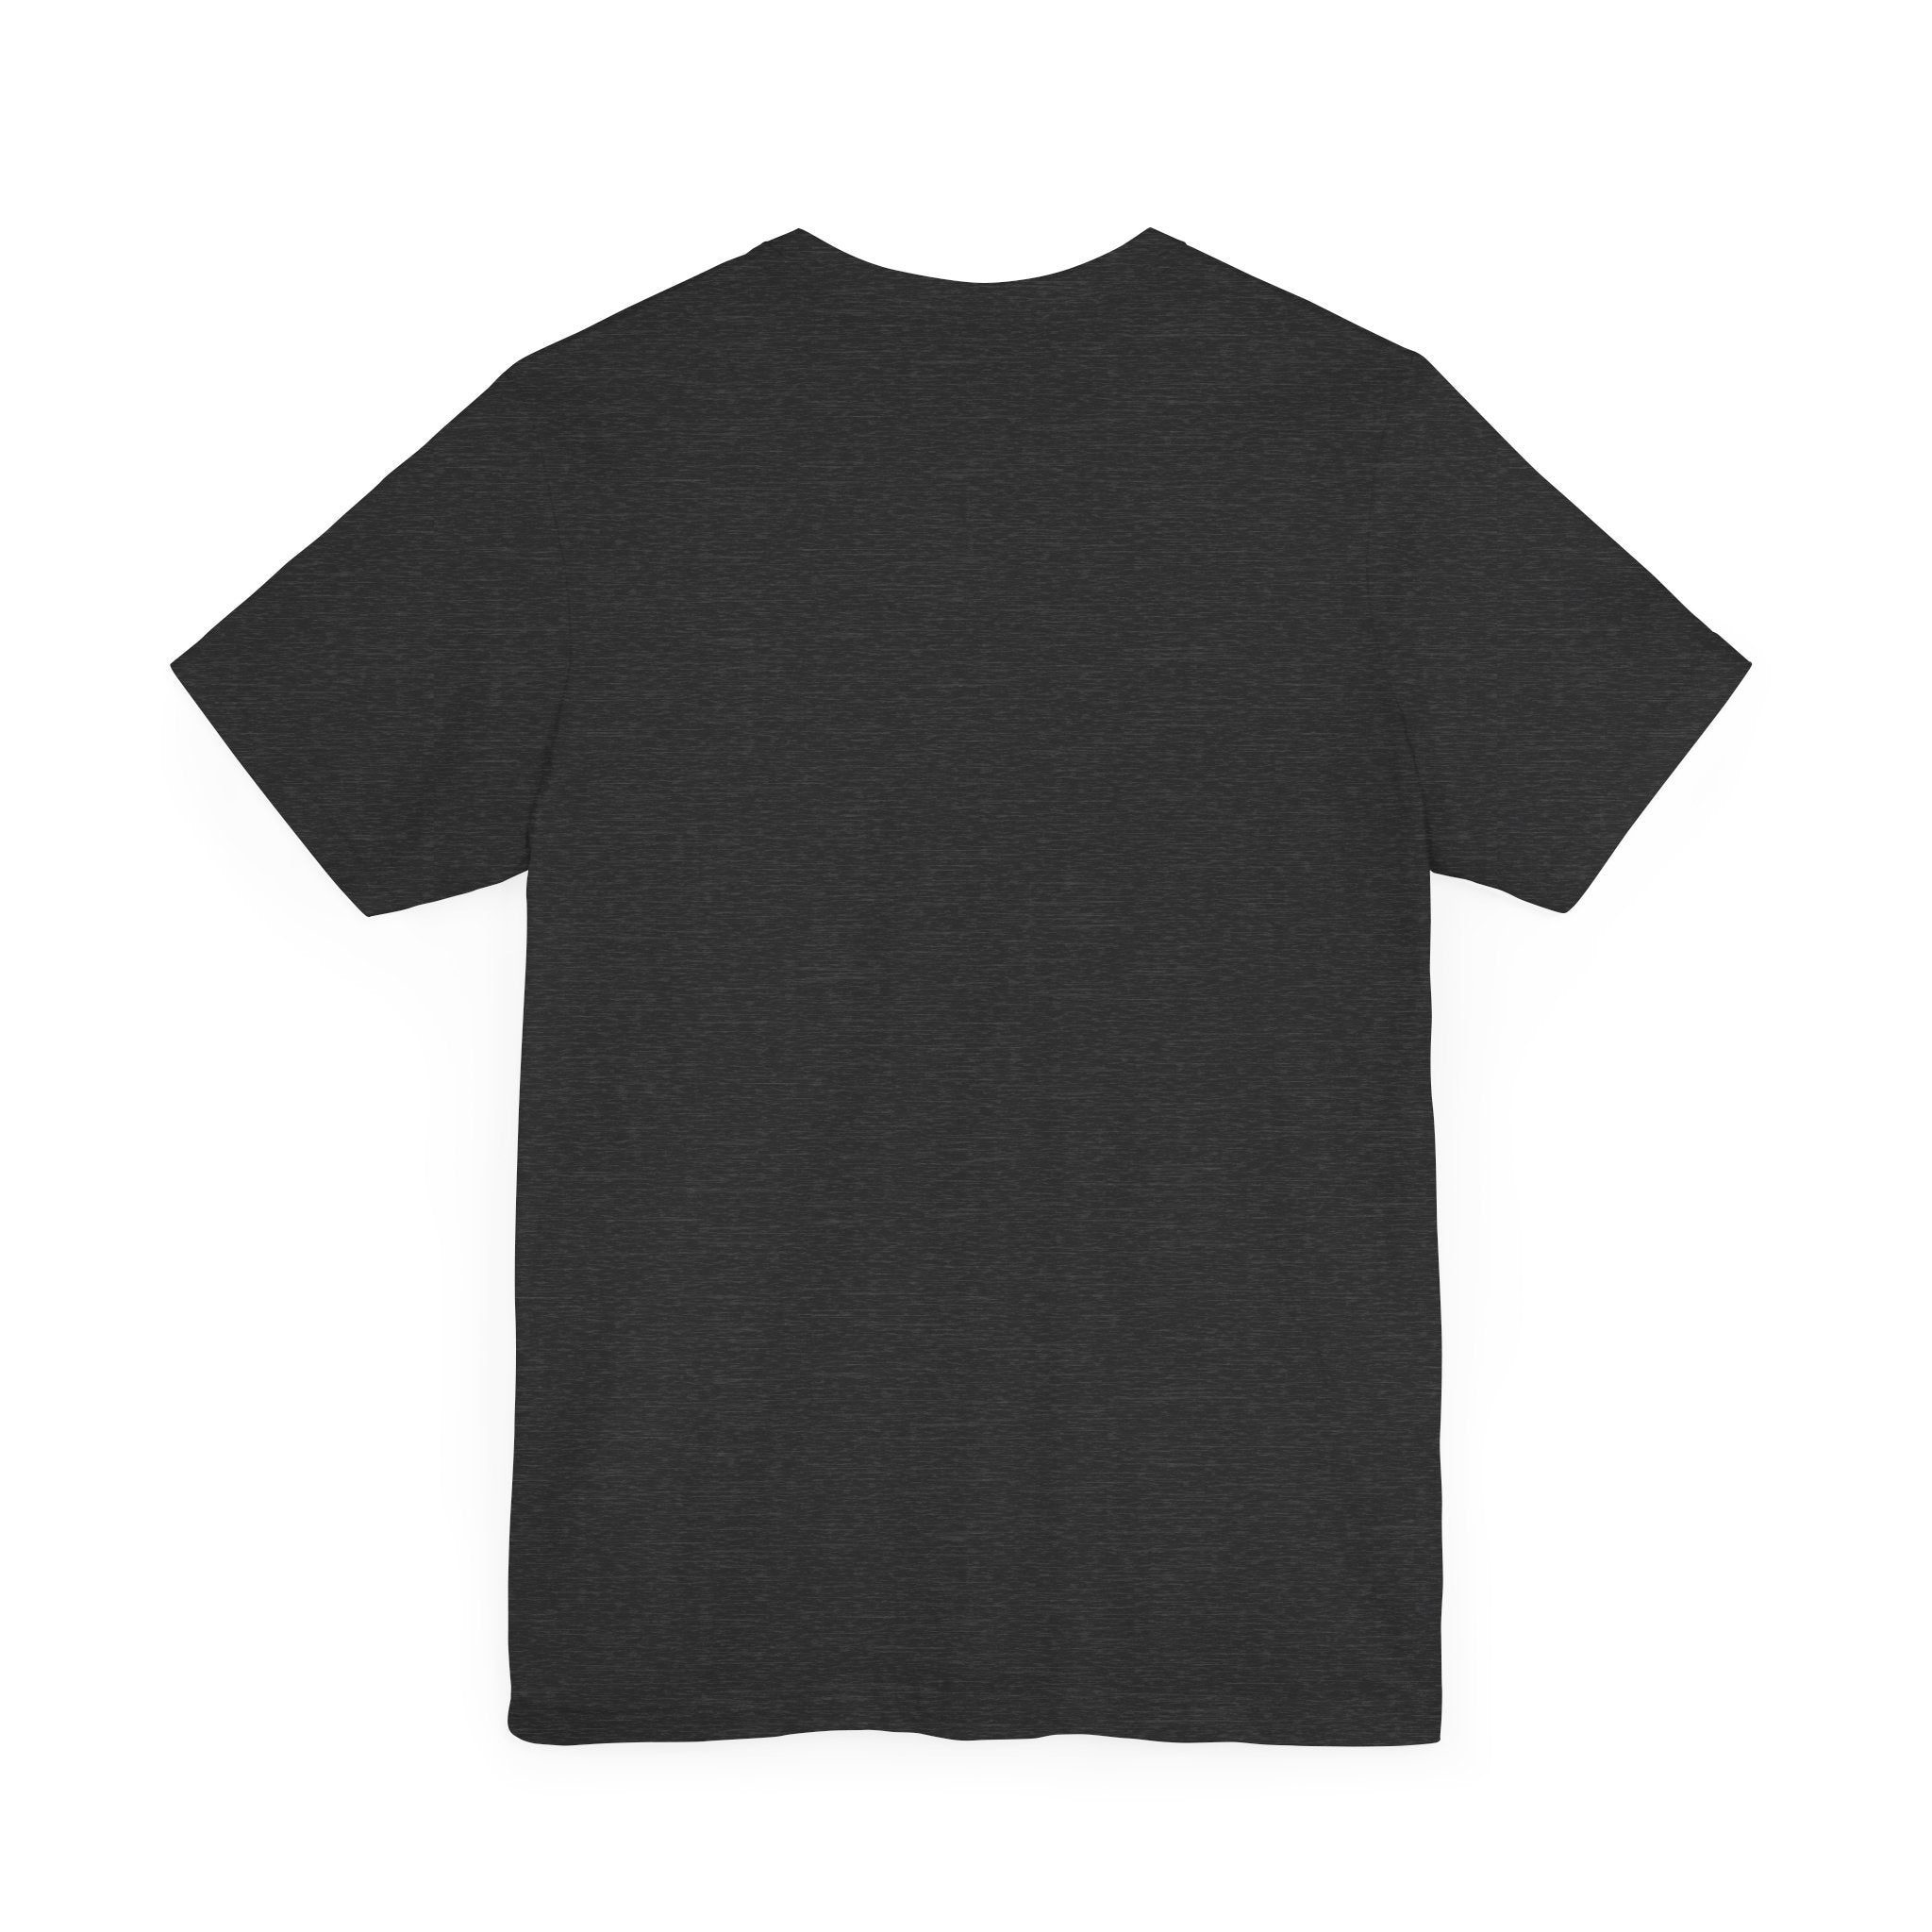 Black Surfing T-Shirt with White Logo - Soulshinecreators Unisex Jersey - Direct-to-Garment Printed Item